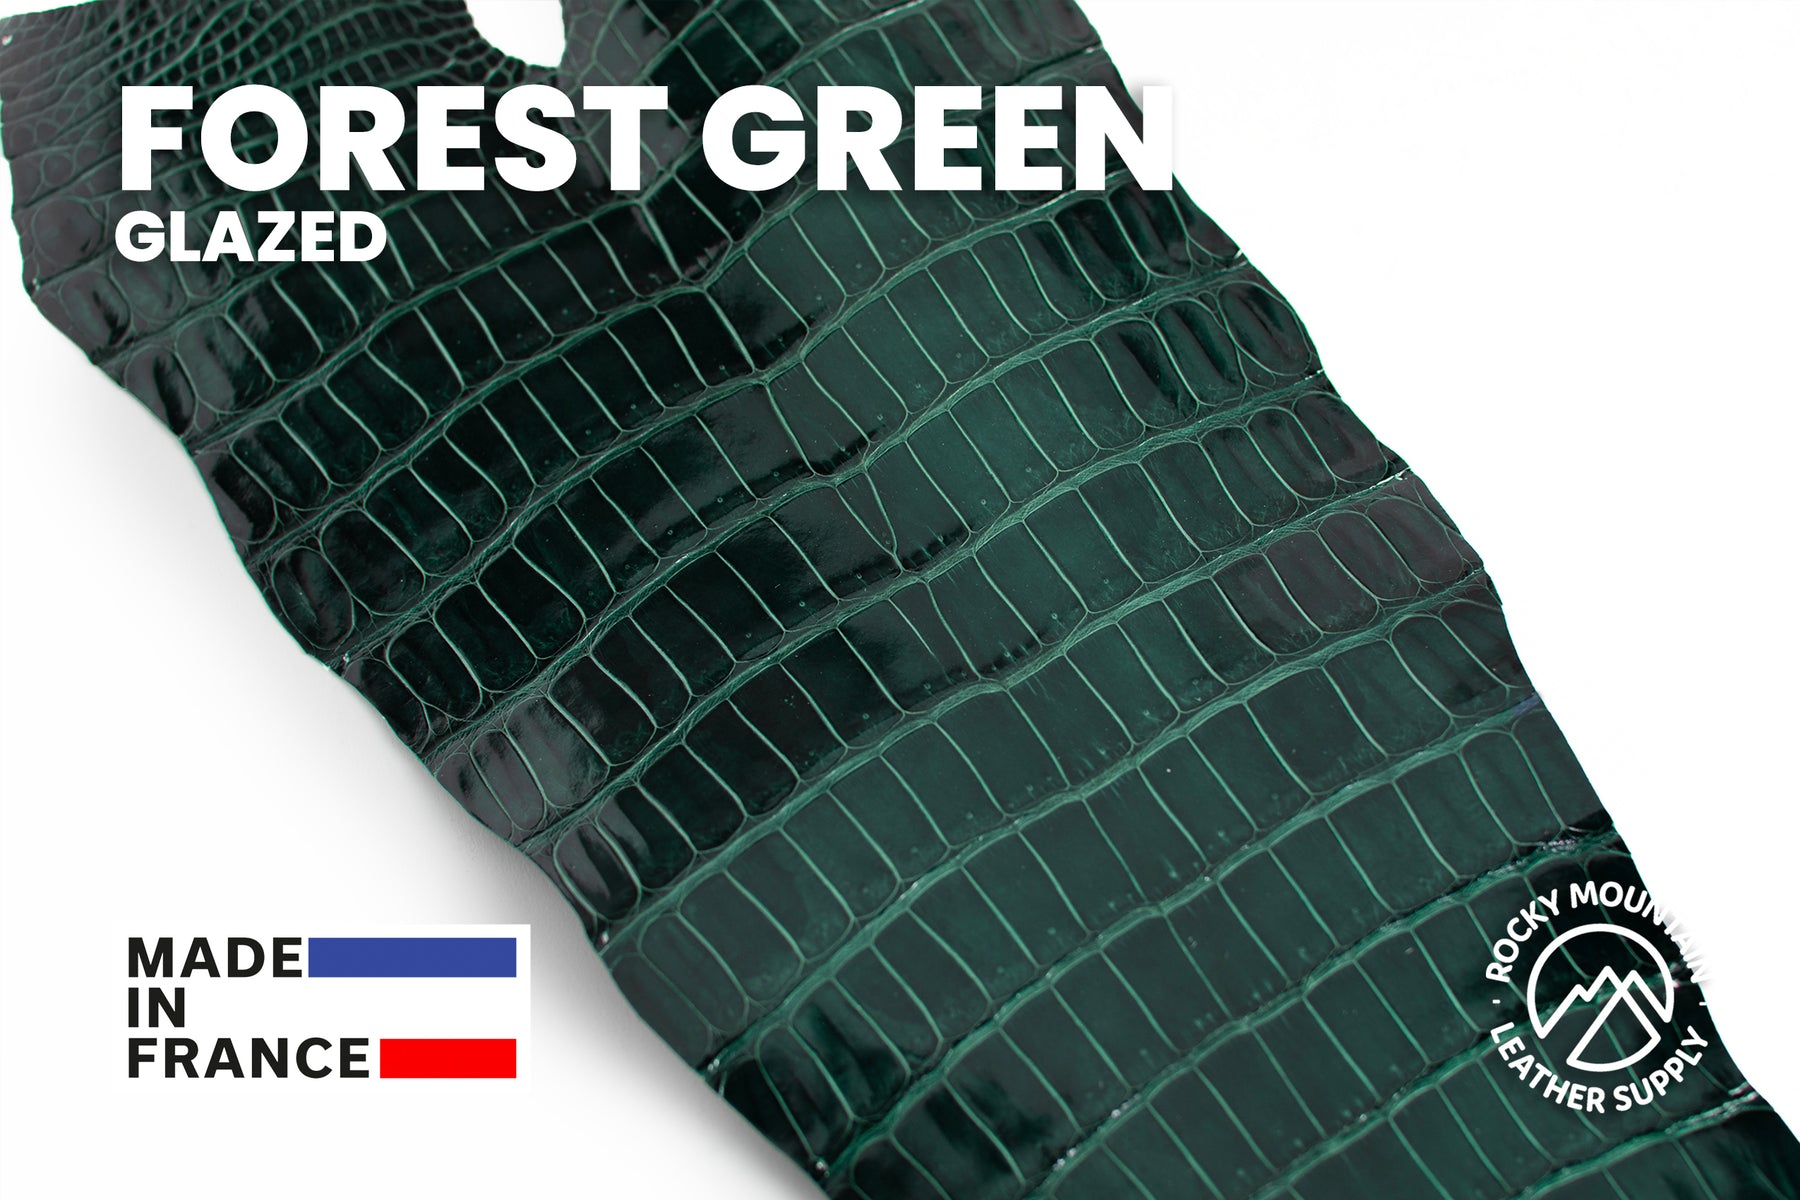 Porosus Crocodile Tails - Luxury Skins (Glazed Forest Green) 40% OFF!